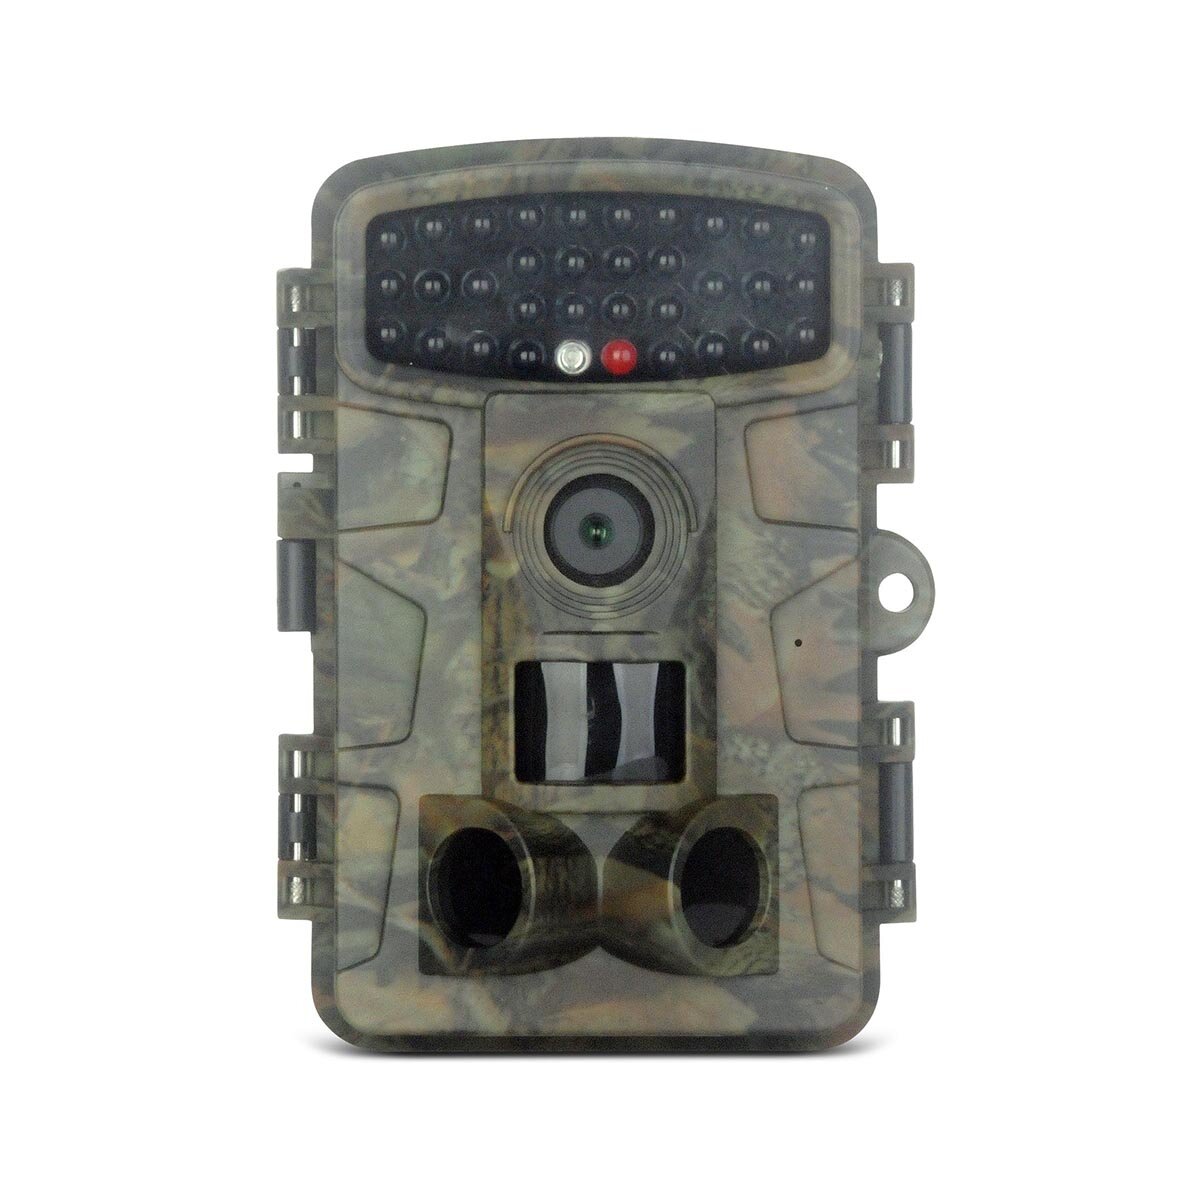 Suntek DL023 20MP HD 1080P 0.2s Trigger Time Waterproof IP65 IR Night Vision Hunting Camera Trail Camera Outdoor Wildlife Monitoring Home Security Surveillance